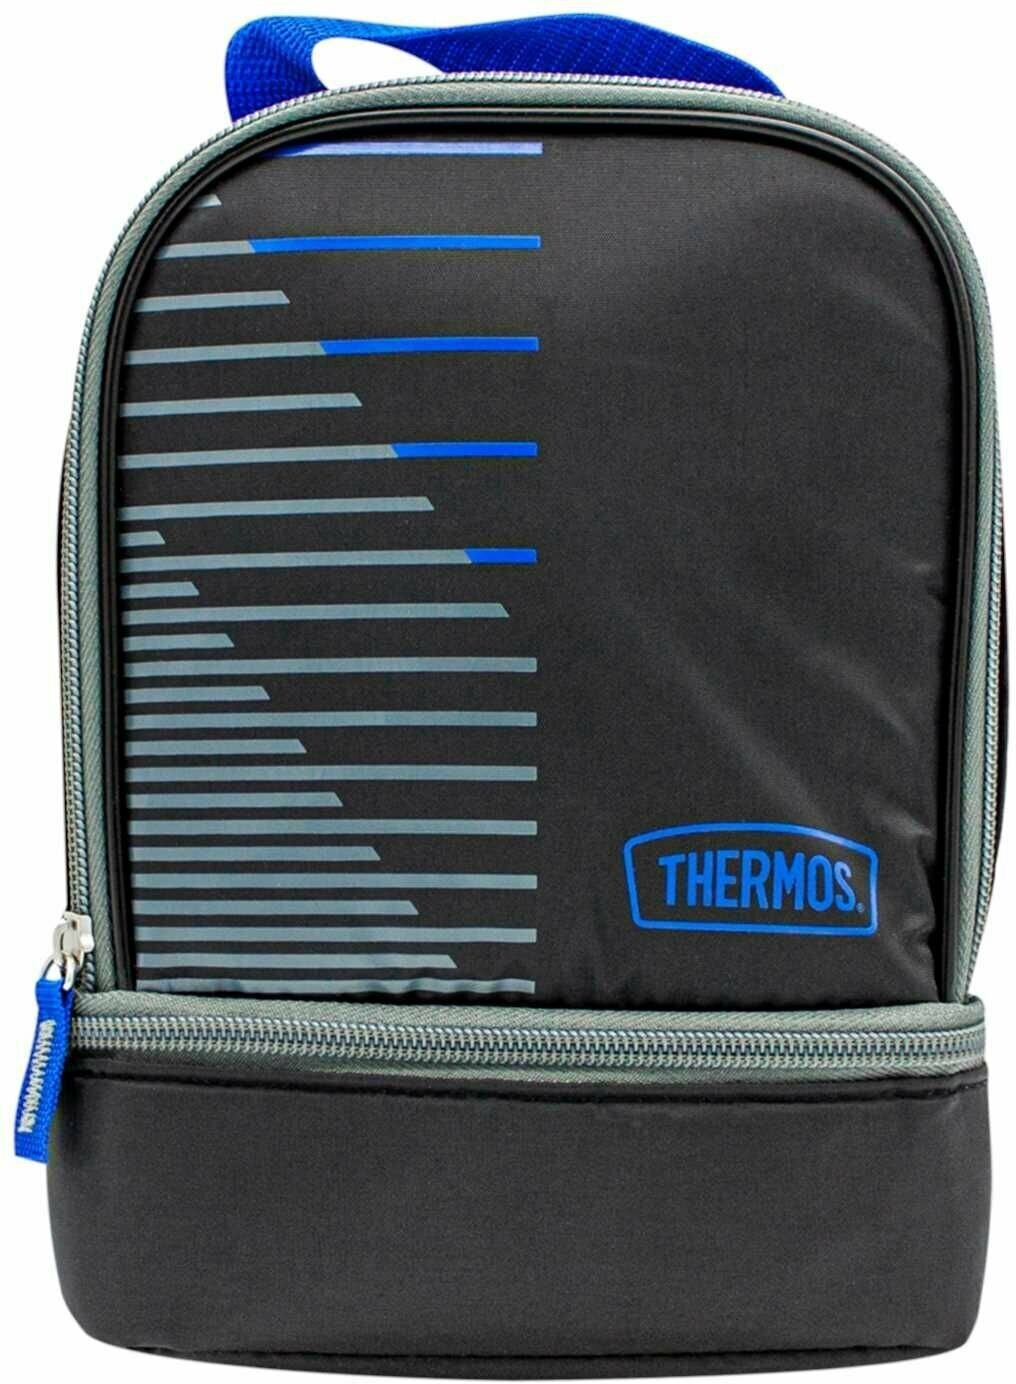 Сумка-термос THERMOS Dual Lunch Kit 3л Арт. 765659